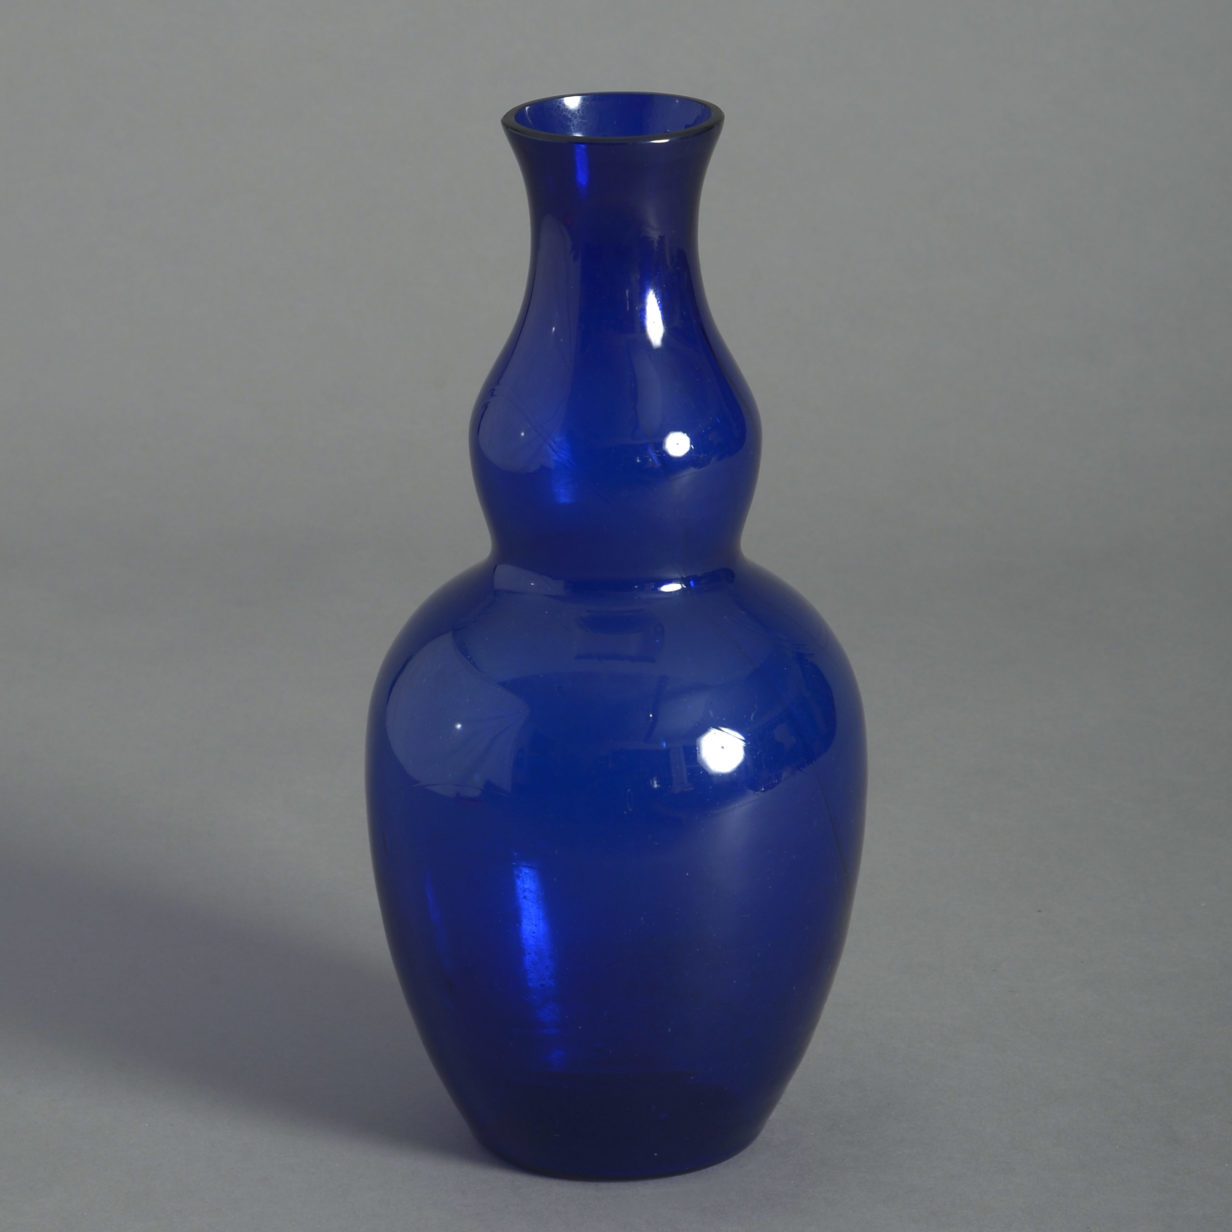 19th century bristol blue glass vase